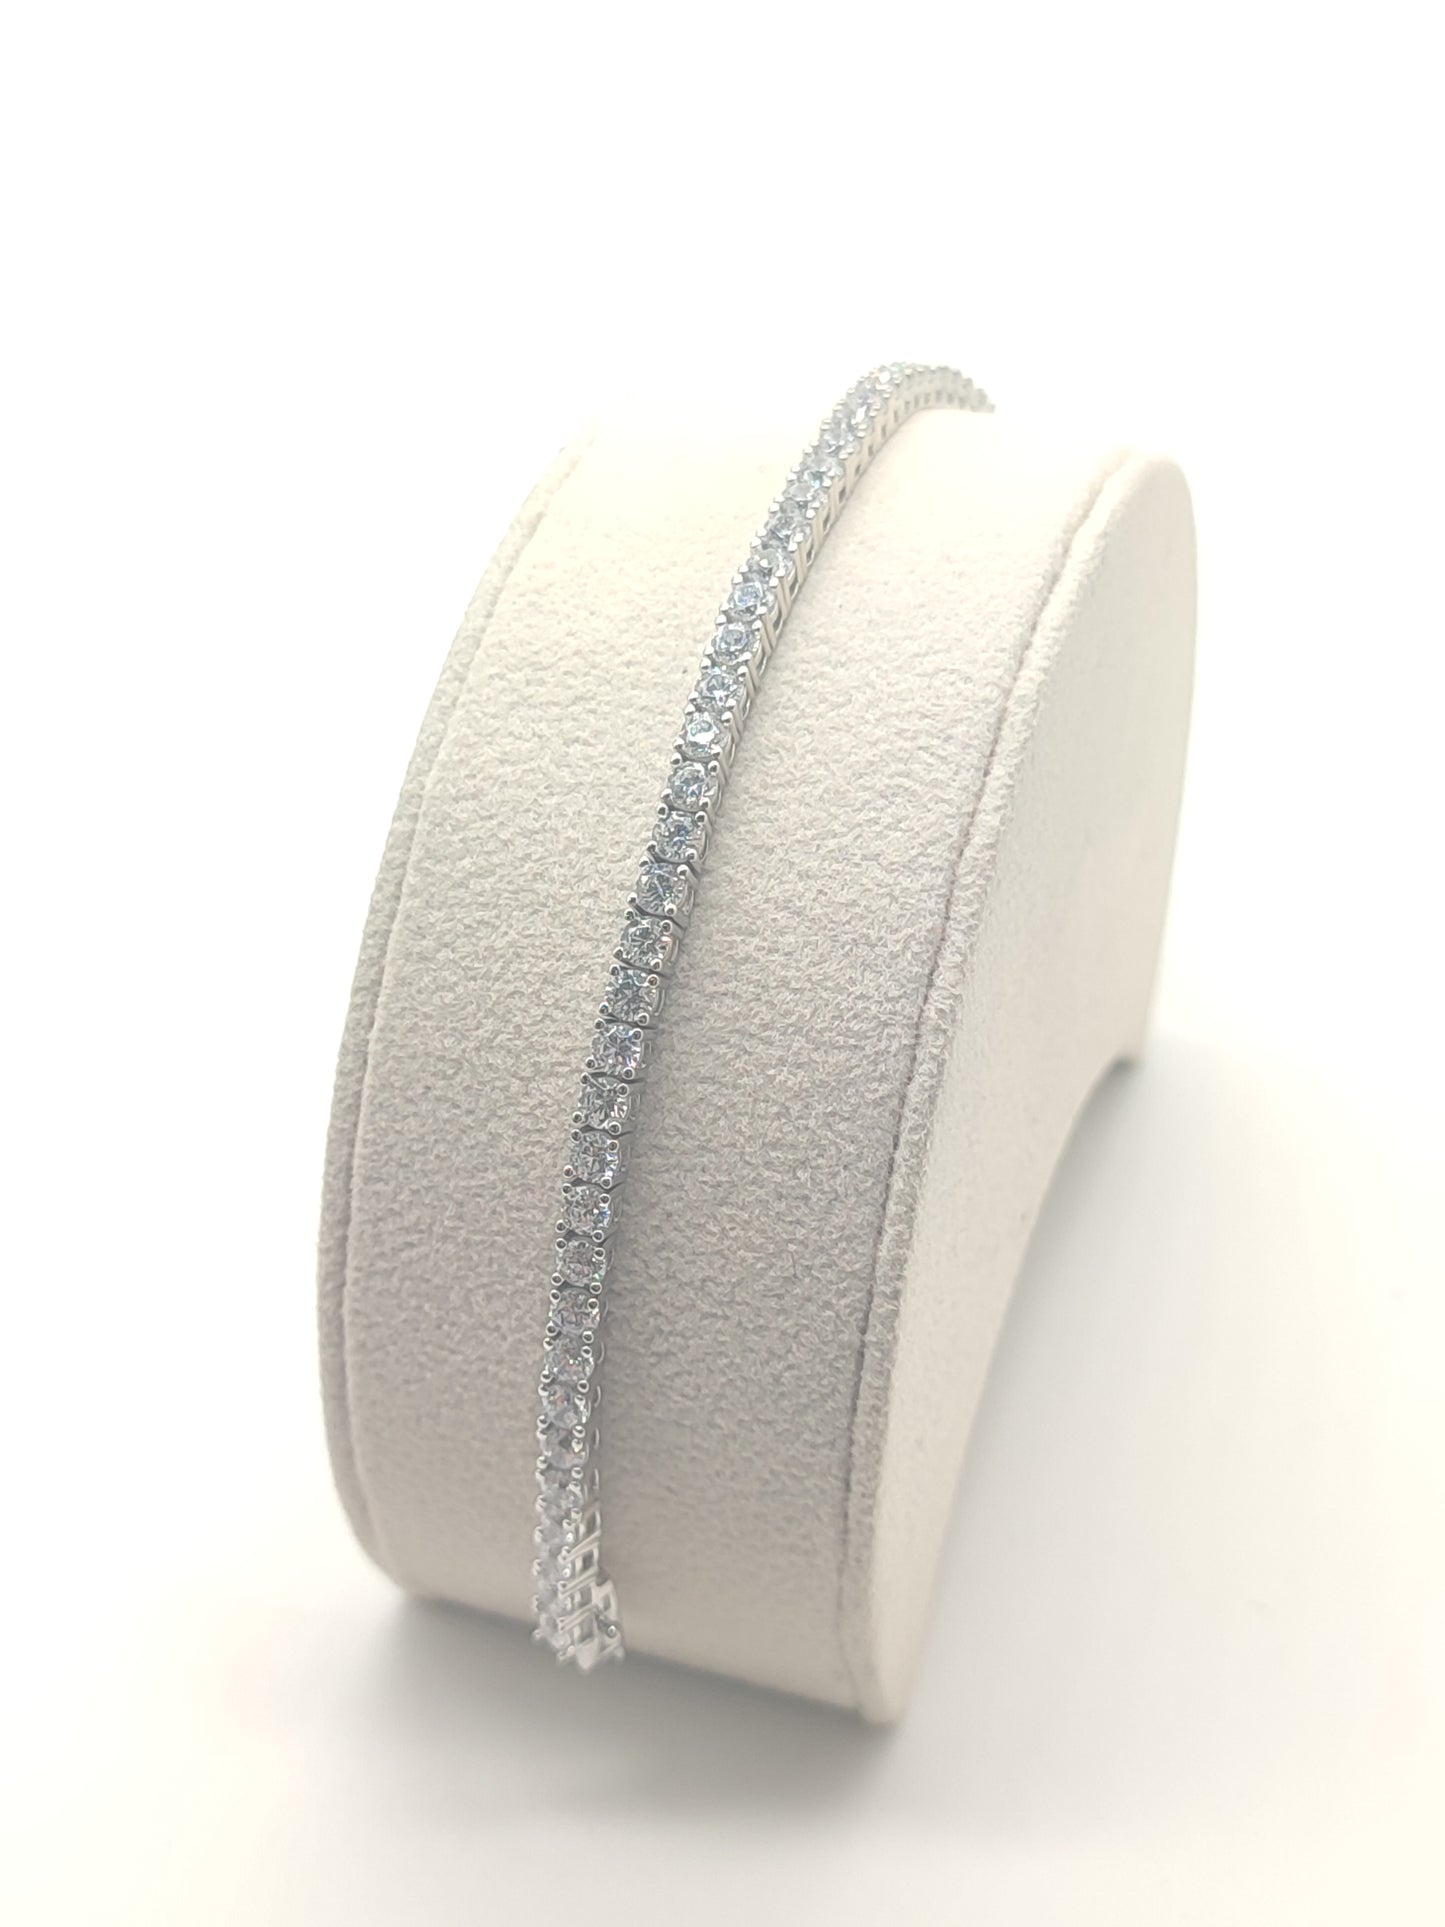 Silver tennis bracelet with 3mm zircons